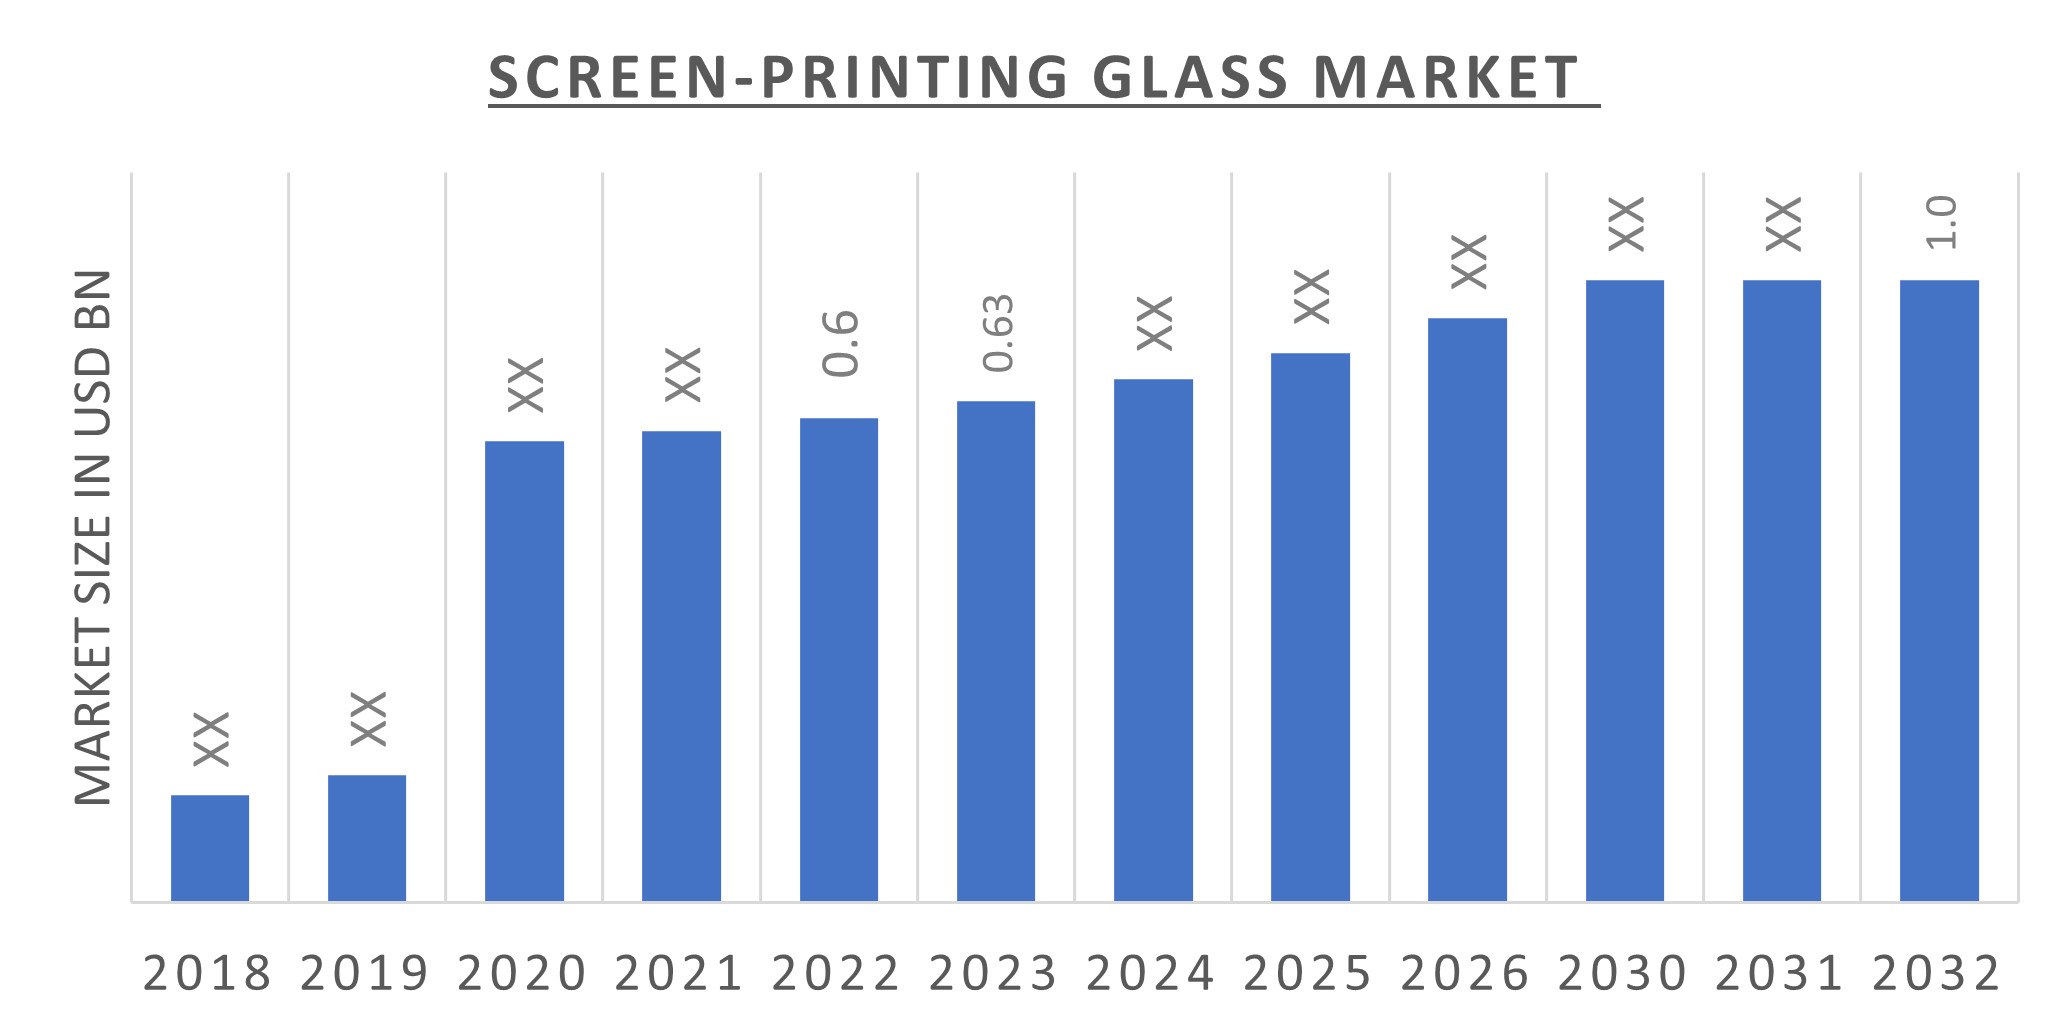 Screen Printing Glass Market